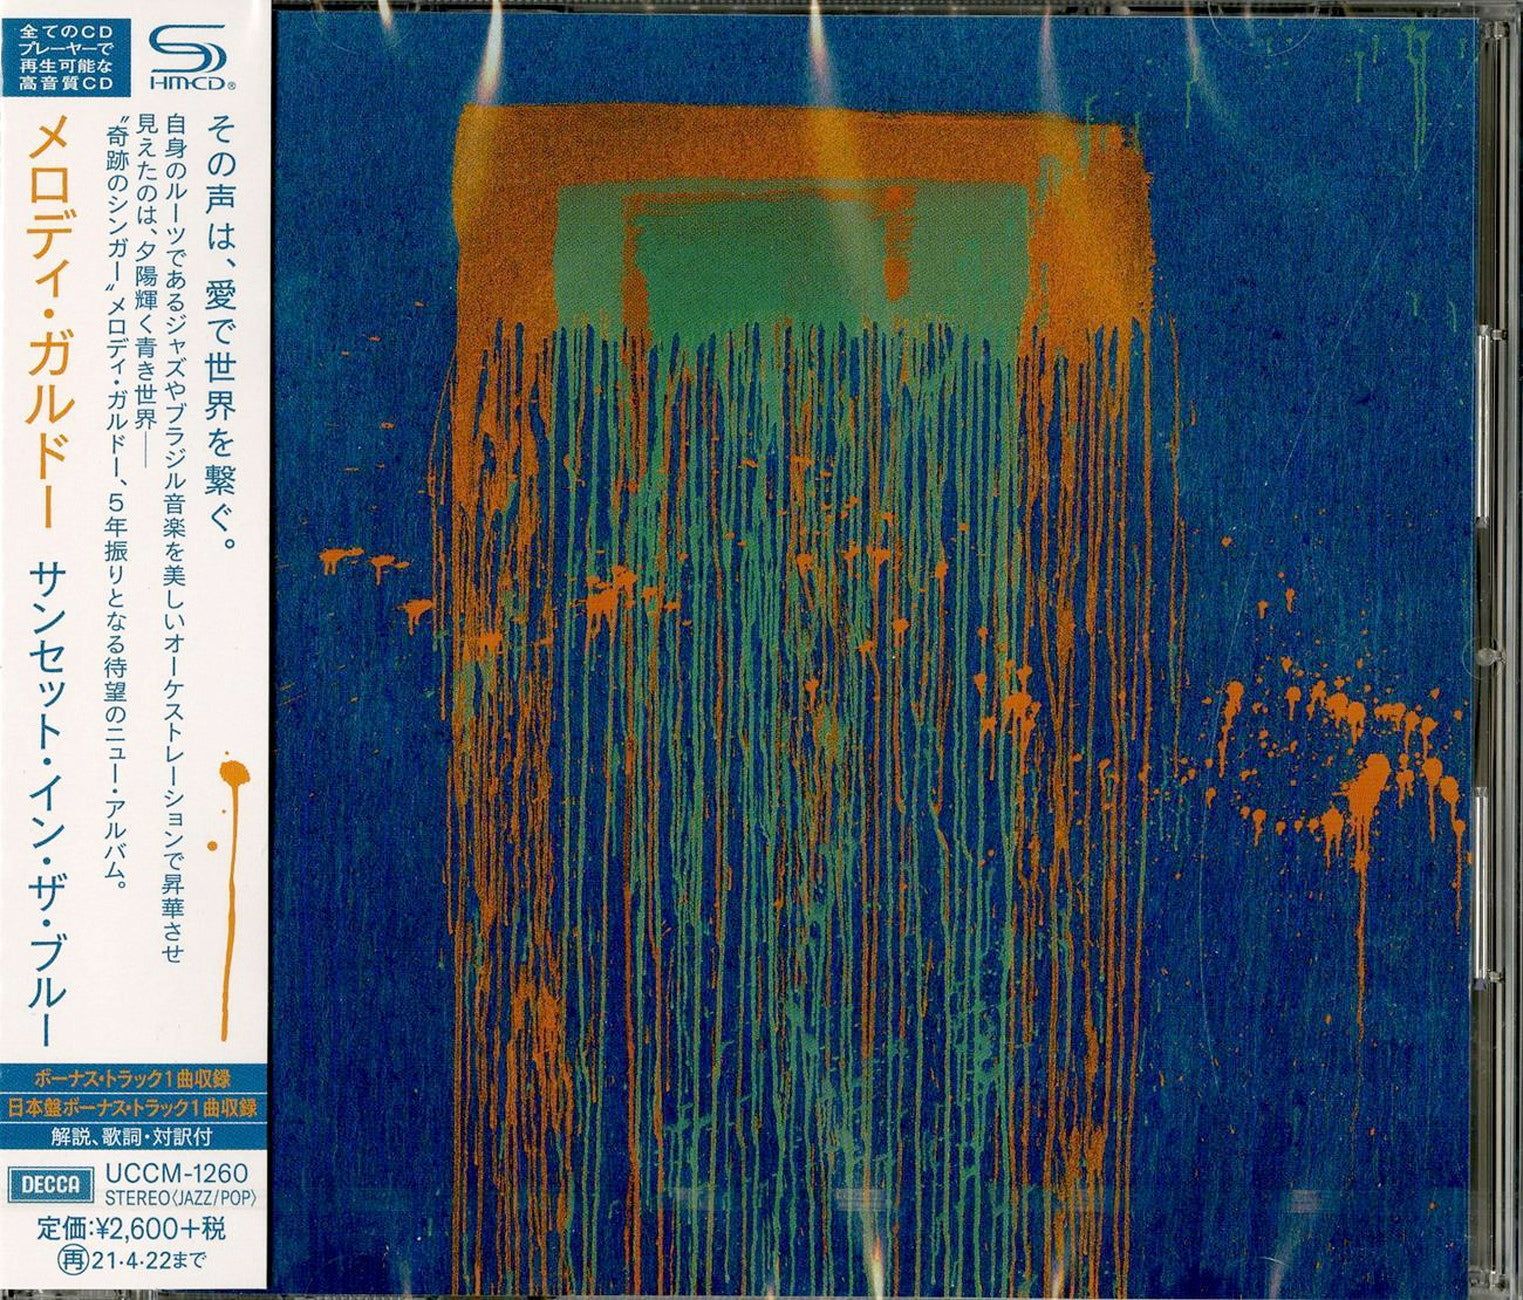 Melody Gardot - Unaltd - Japan SHM-CD Bonus Track – CDs Vinyl